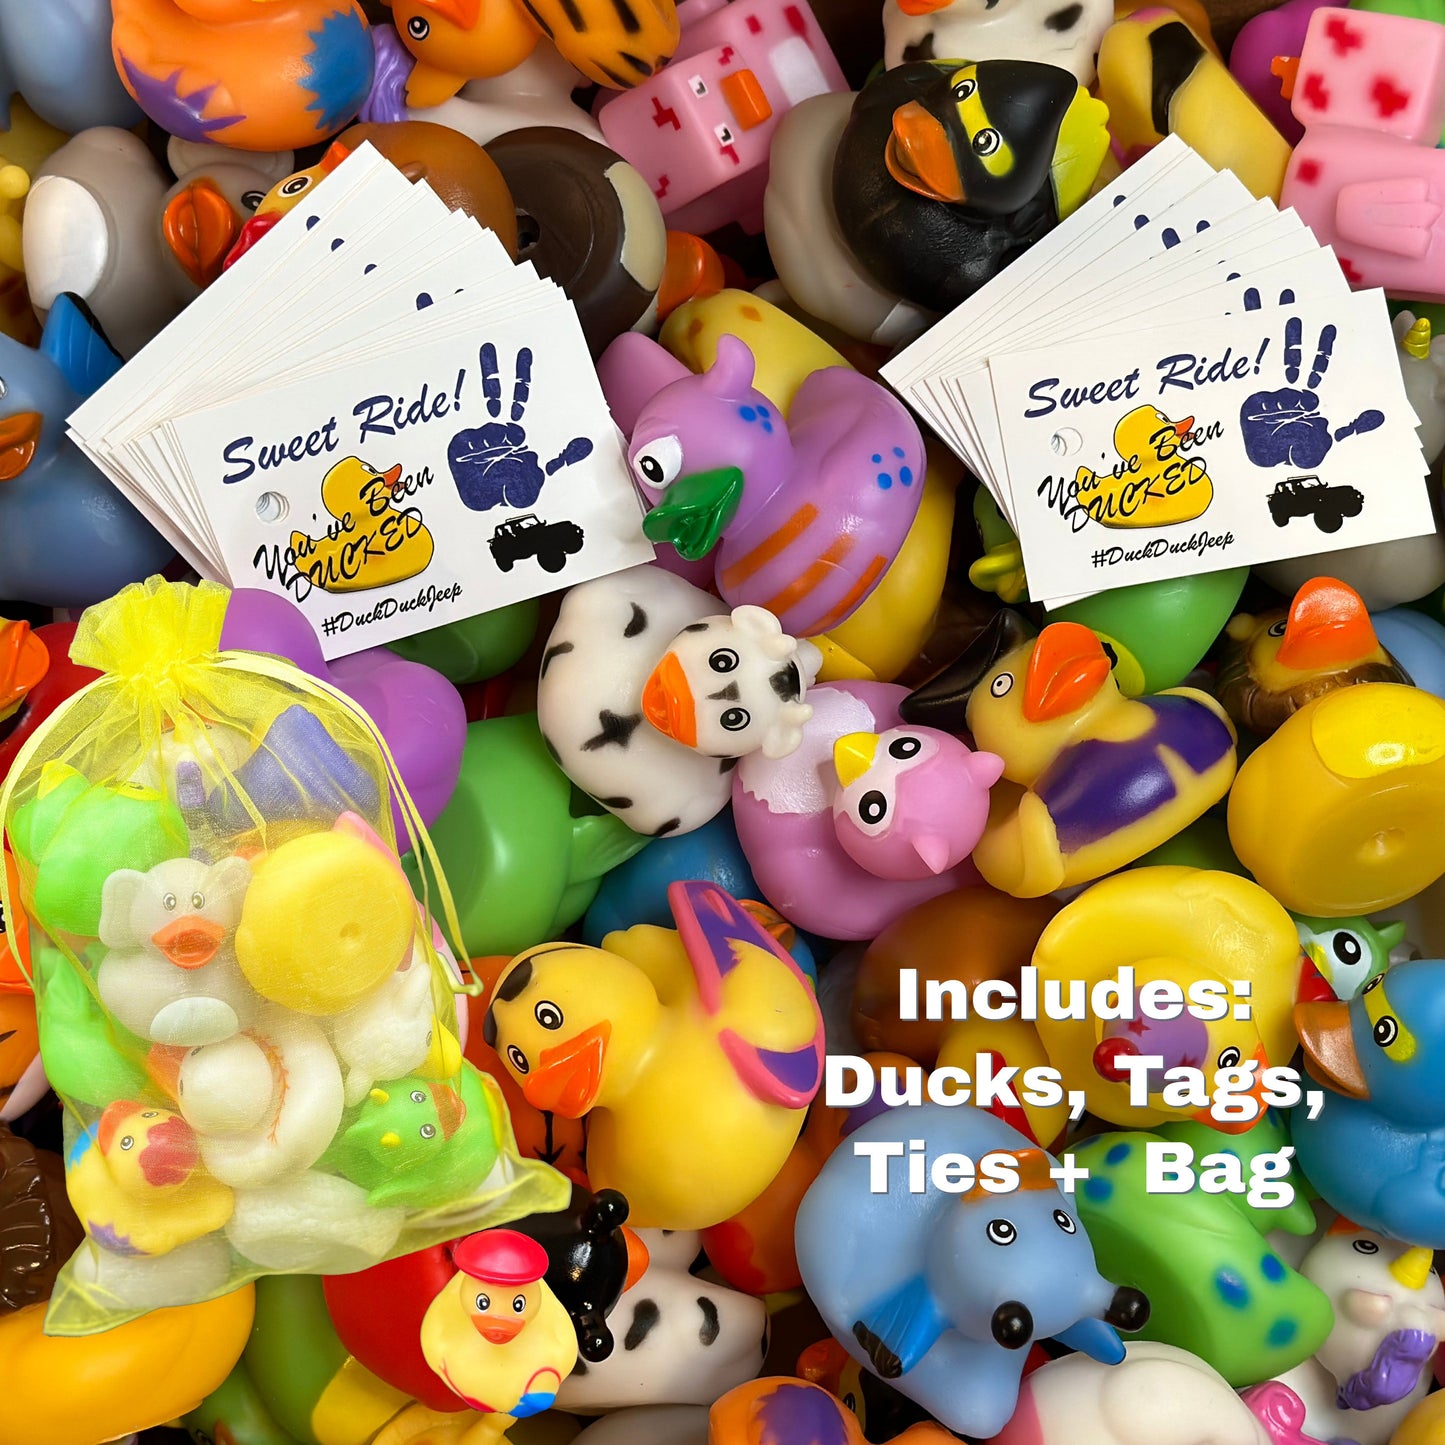 50 Ducks & Tags for #DuckDuckJeep